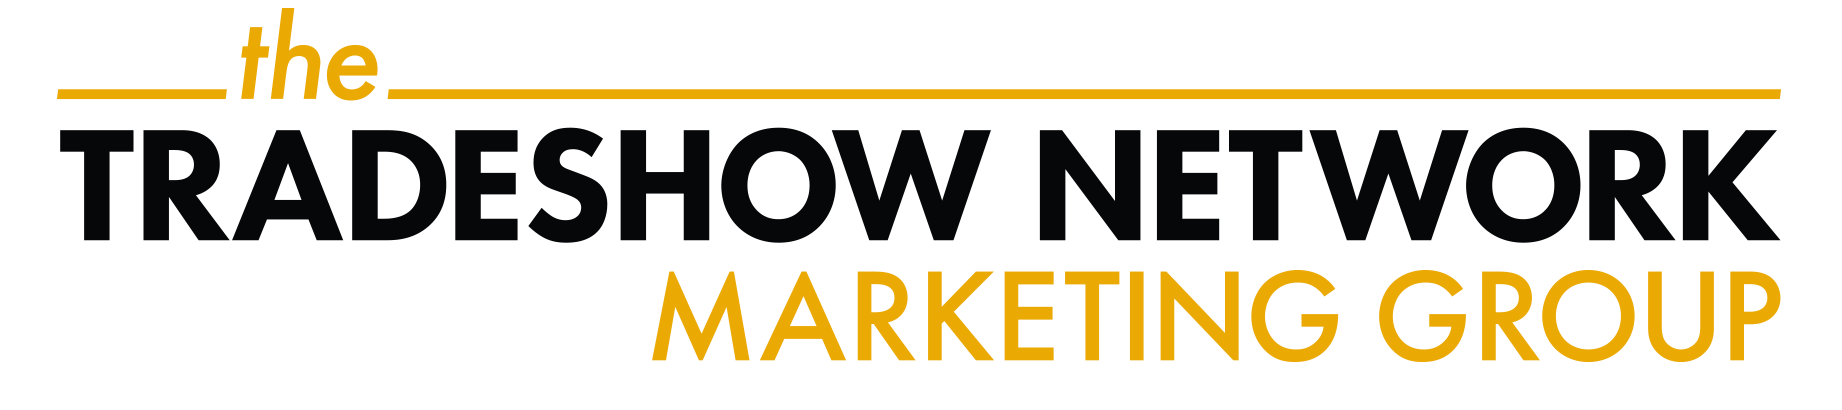 The Tradeshow Network Marketing Group Logo